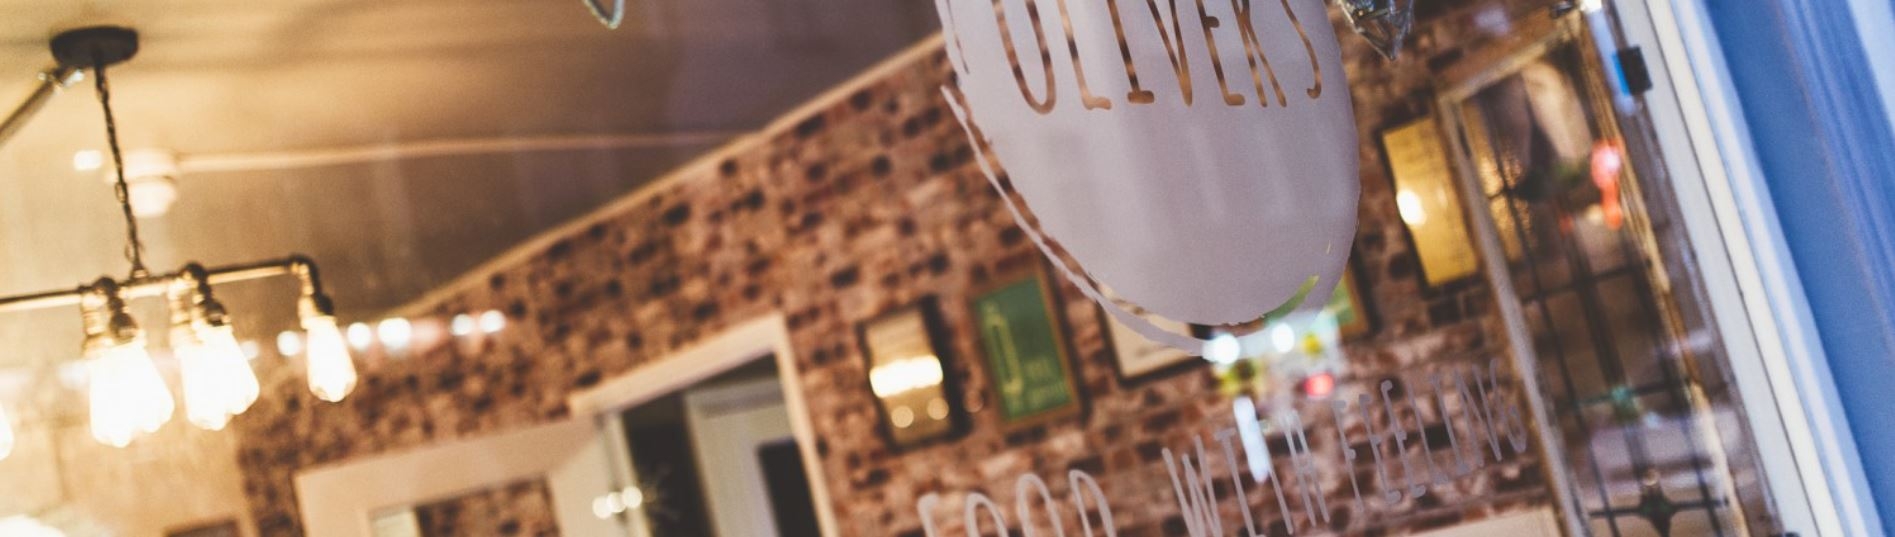 CAFÉ REVIEW: OLIVER’S FRIARGATE, DERBY